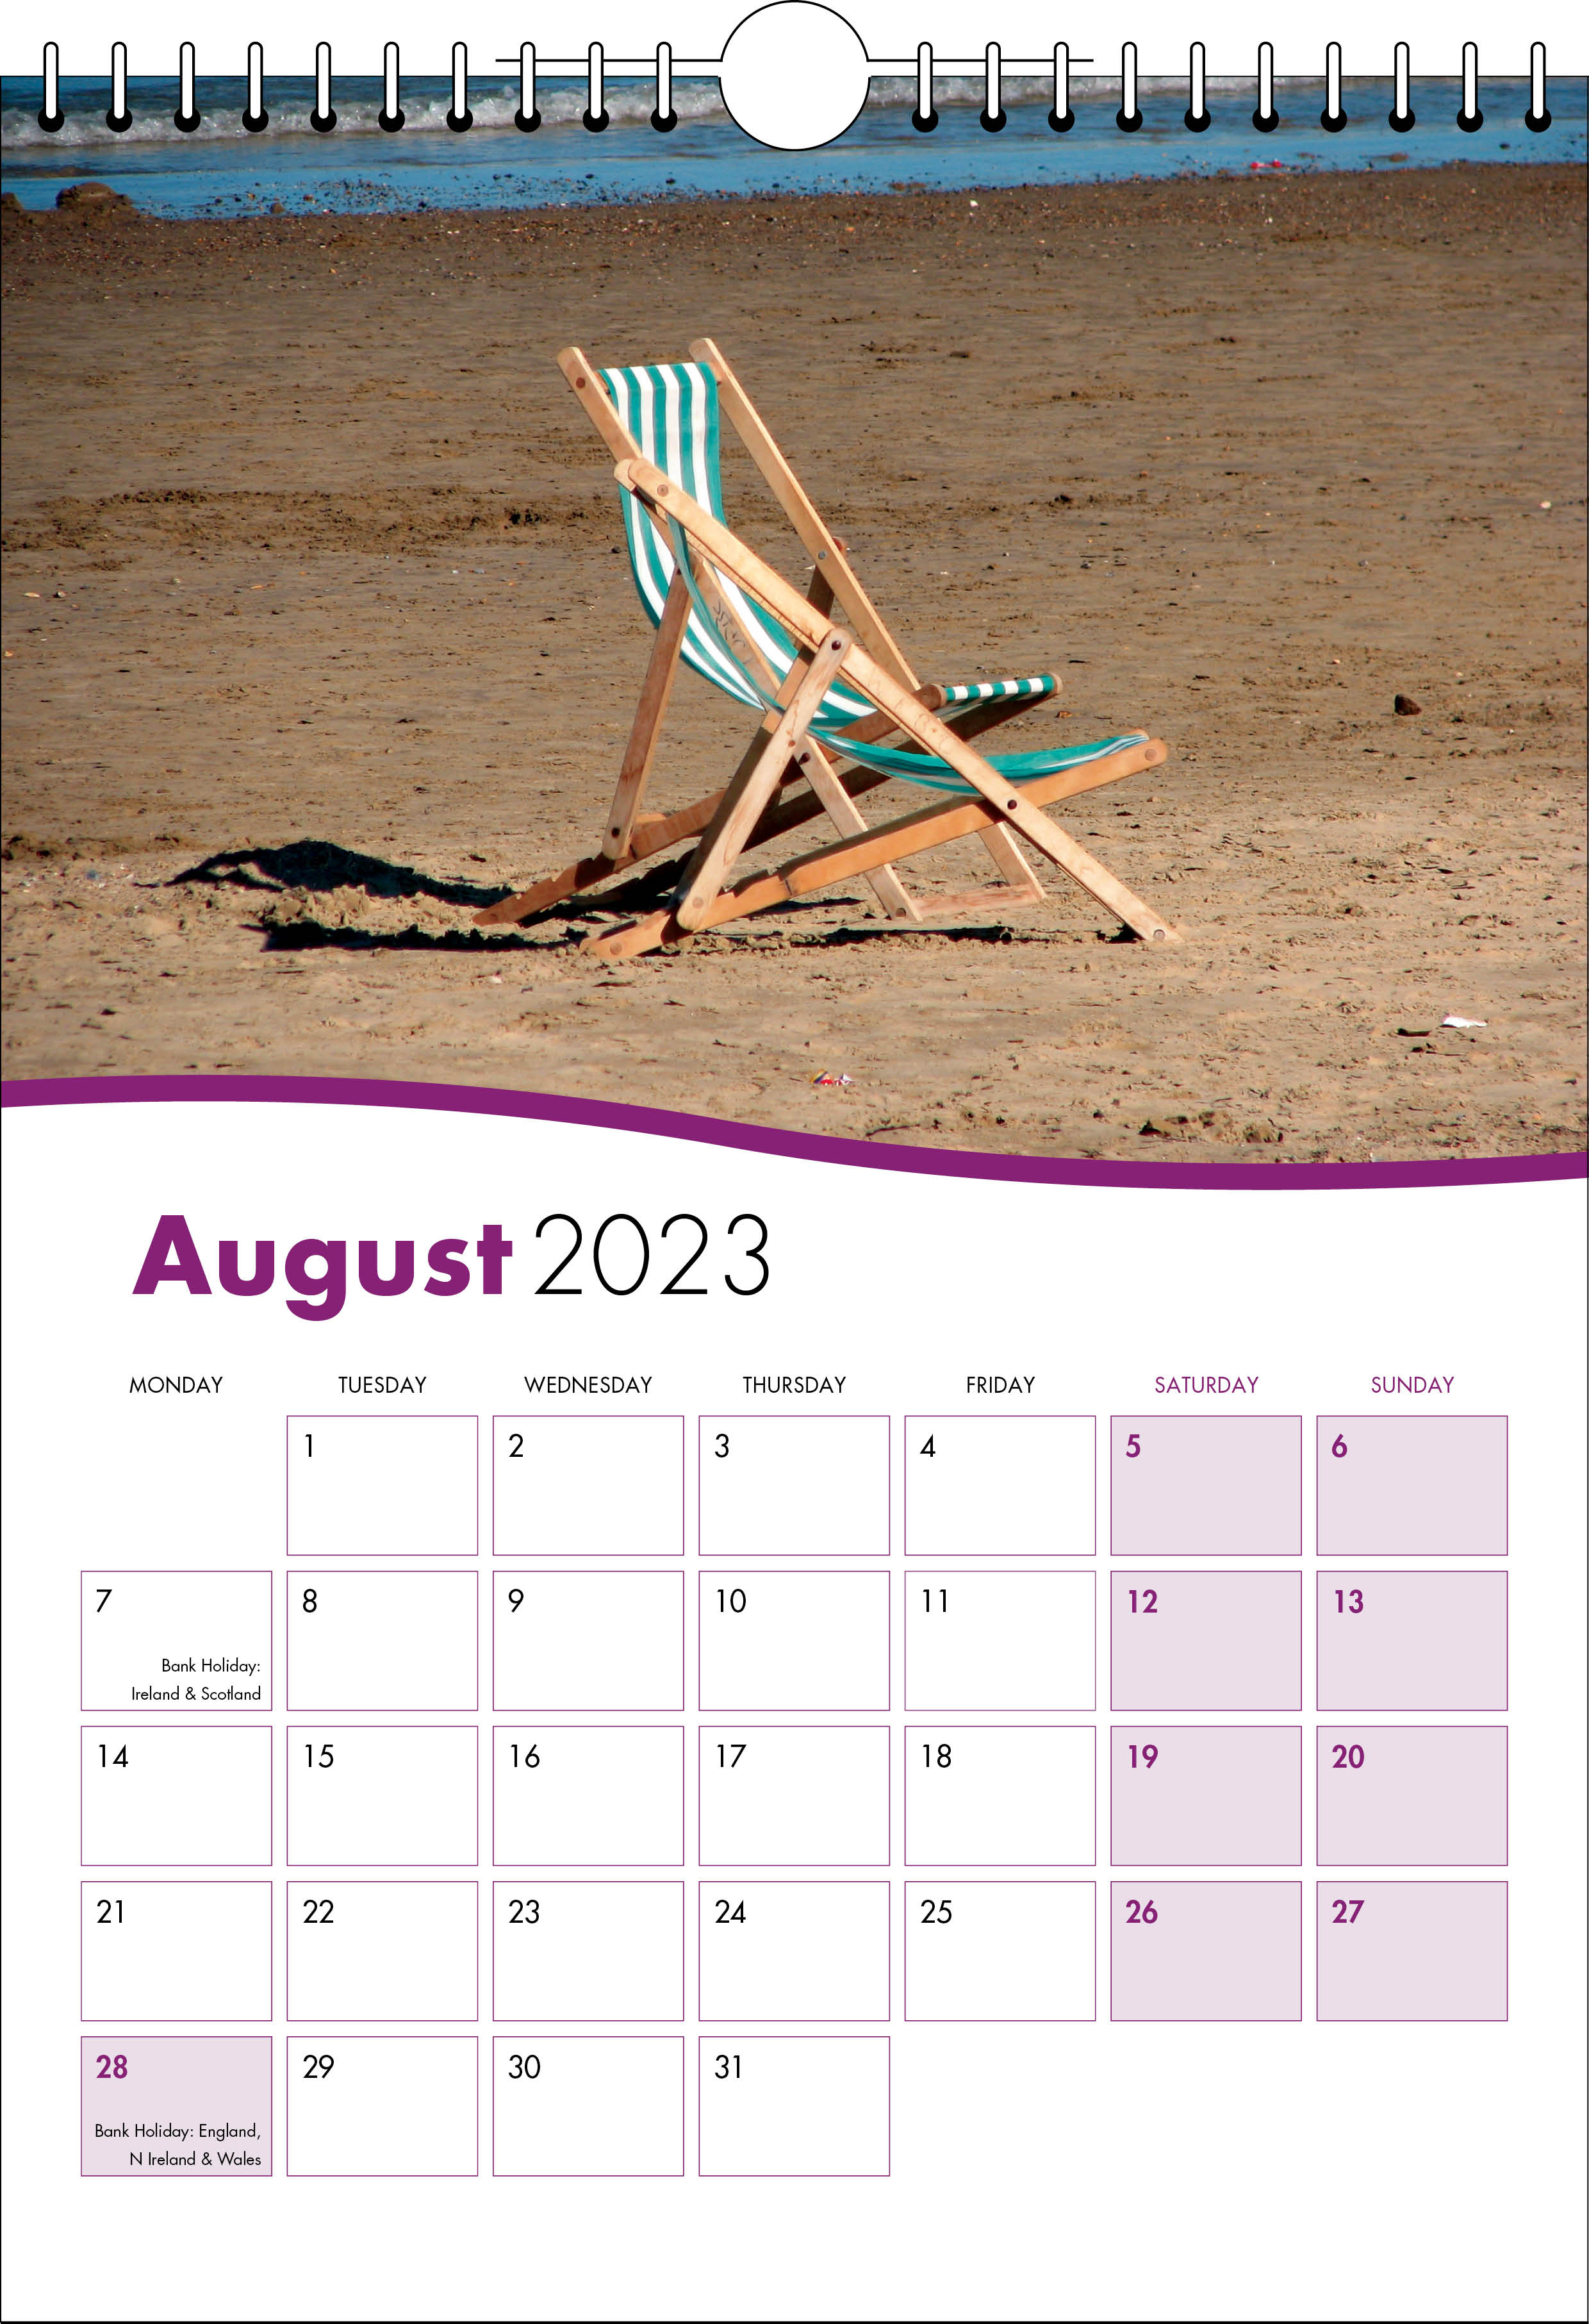 Picture of Spiral Calendar S02 Purple